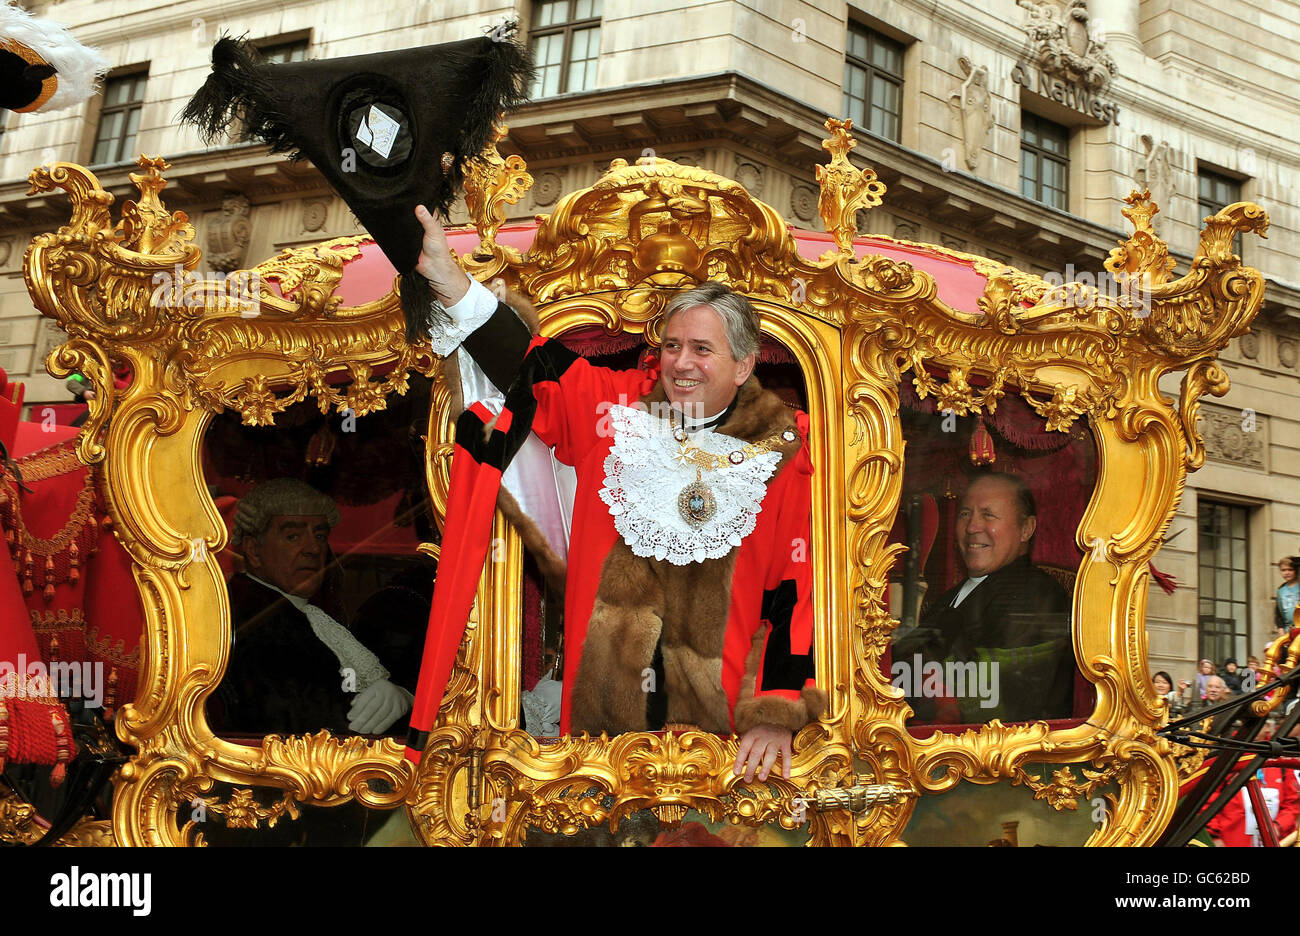 Costumbres y tradiciones - El Alcalde del show - Londres Foto de stock